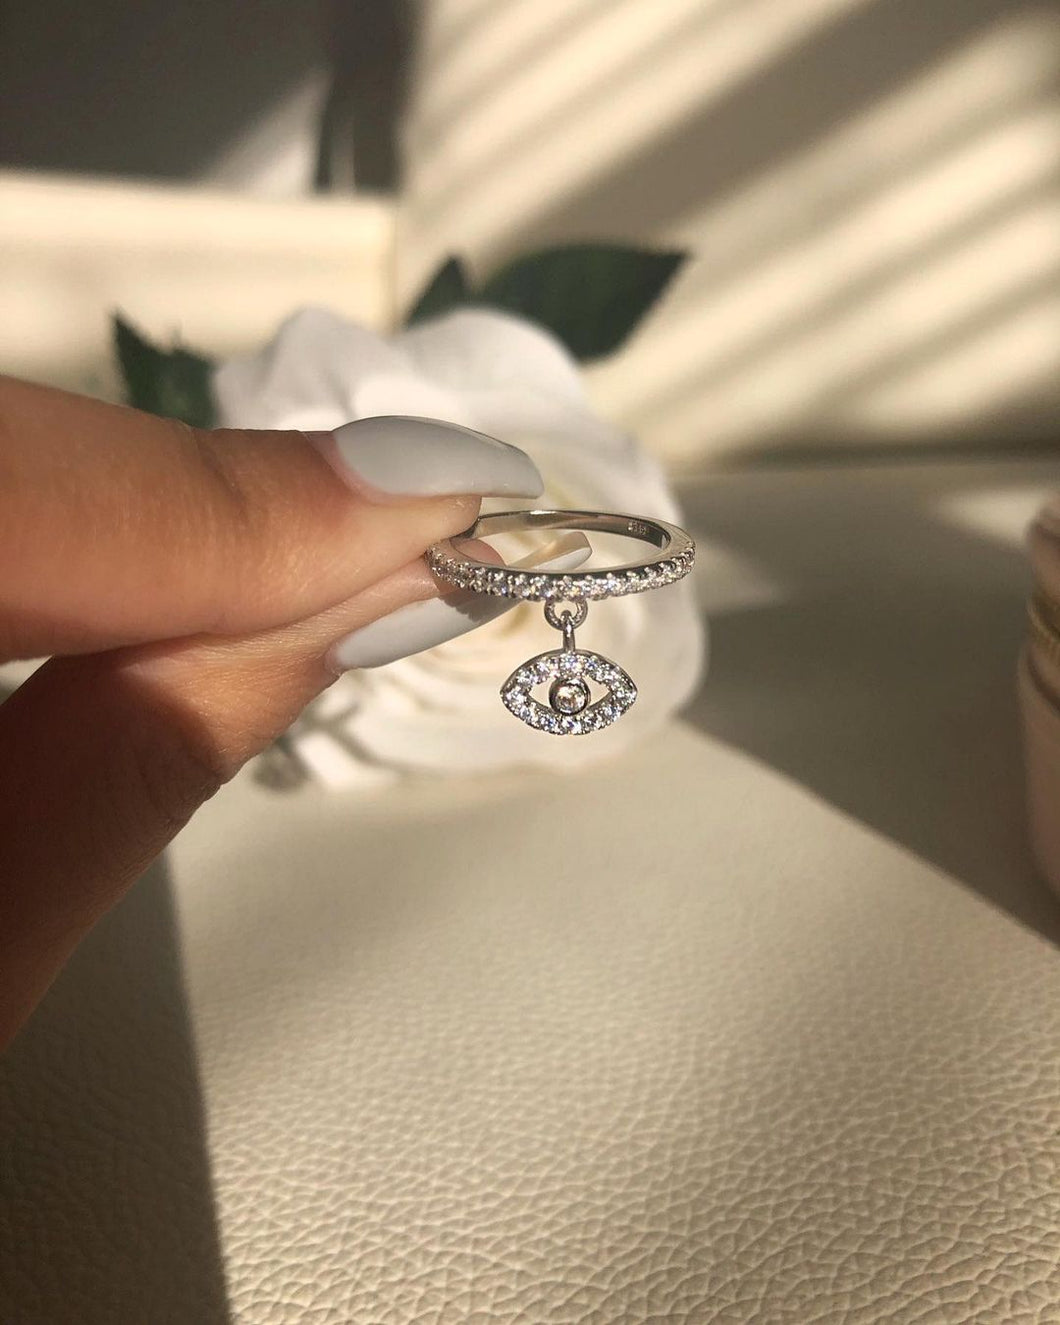 The Stunning Dainty Eye Silver Ring